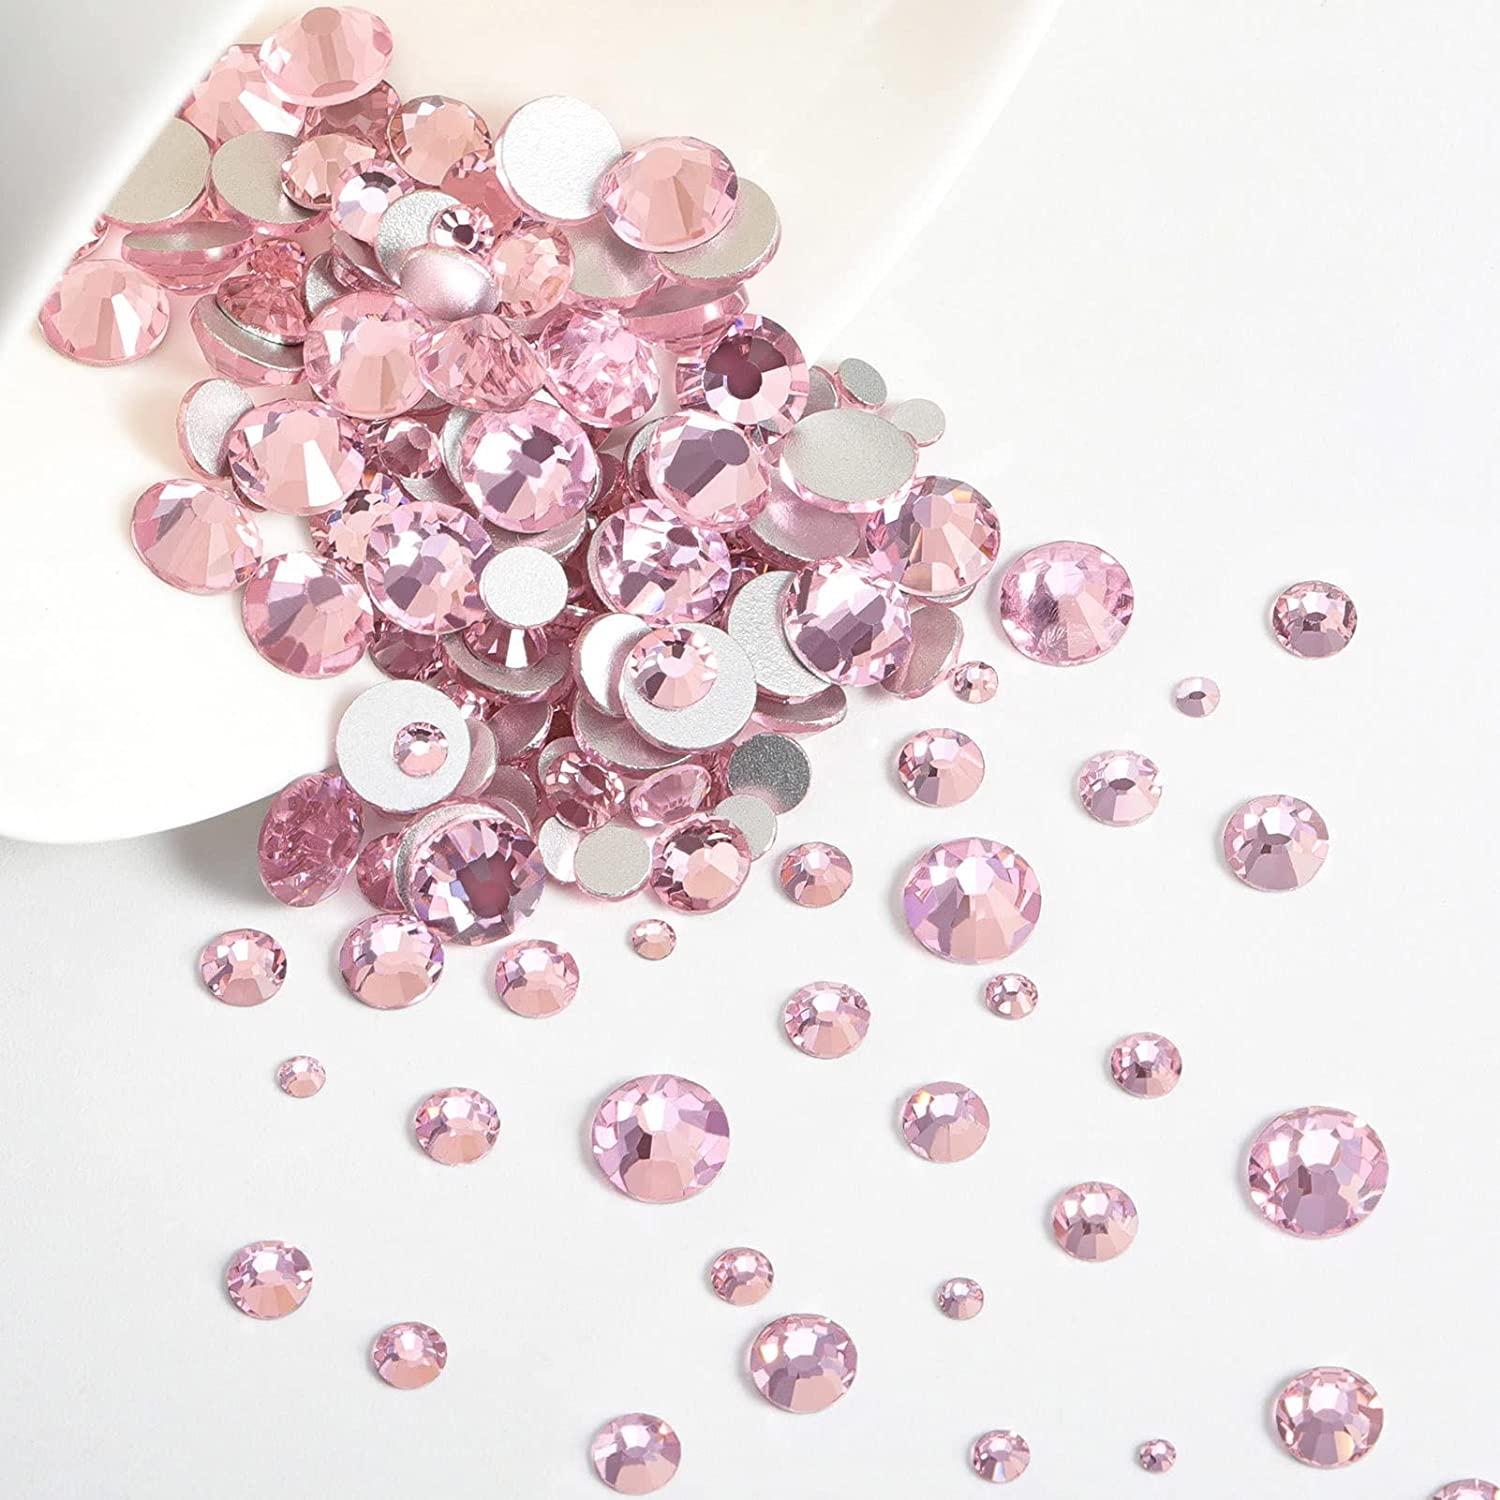  beadsland Flat Back Crystal Rhinestones Round Gems, Light Pink  (4.6-4.8mm) SS20/1440pcs : Arts, Crafts & Sewing